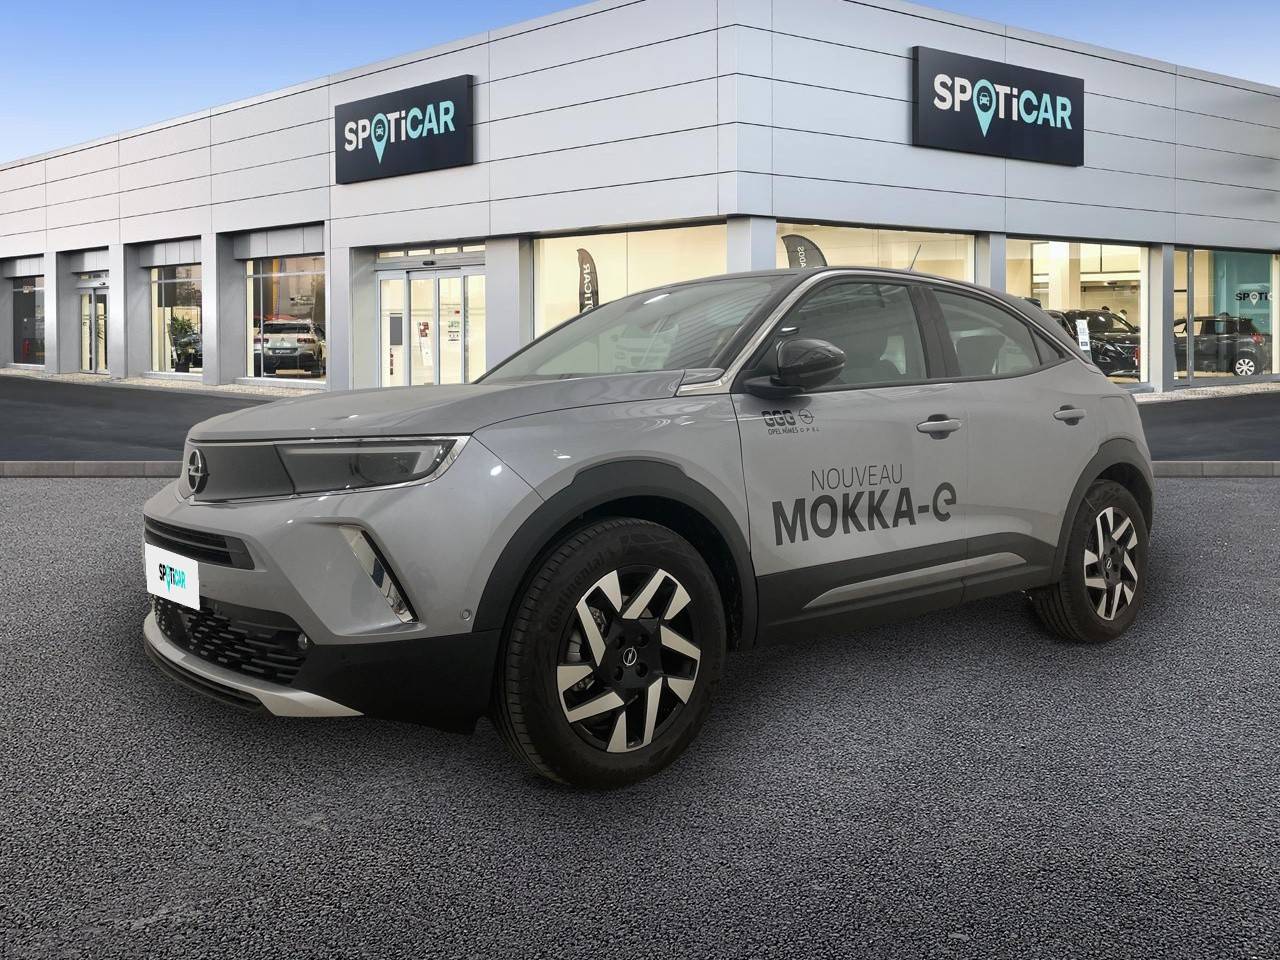 OPEL MOKKA | Mokka Electrique 136 ch & Batterie 50 kWh occasion - Peugeot Nîmes